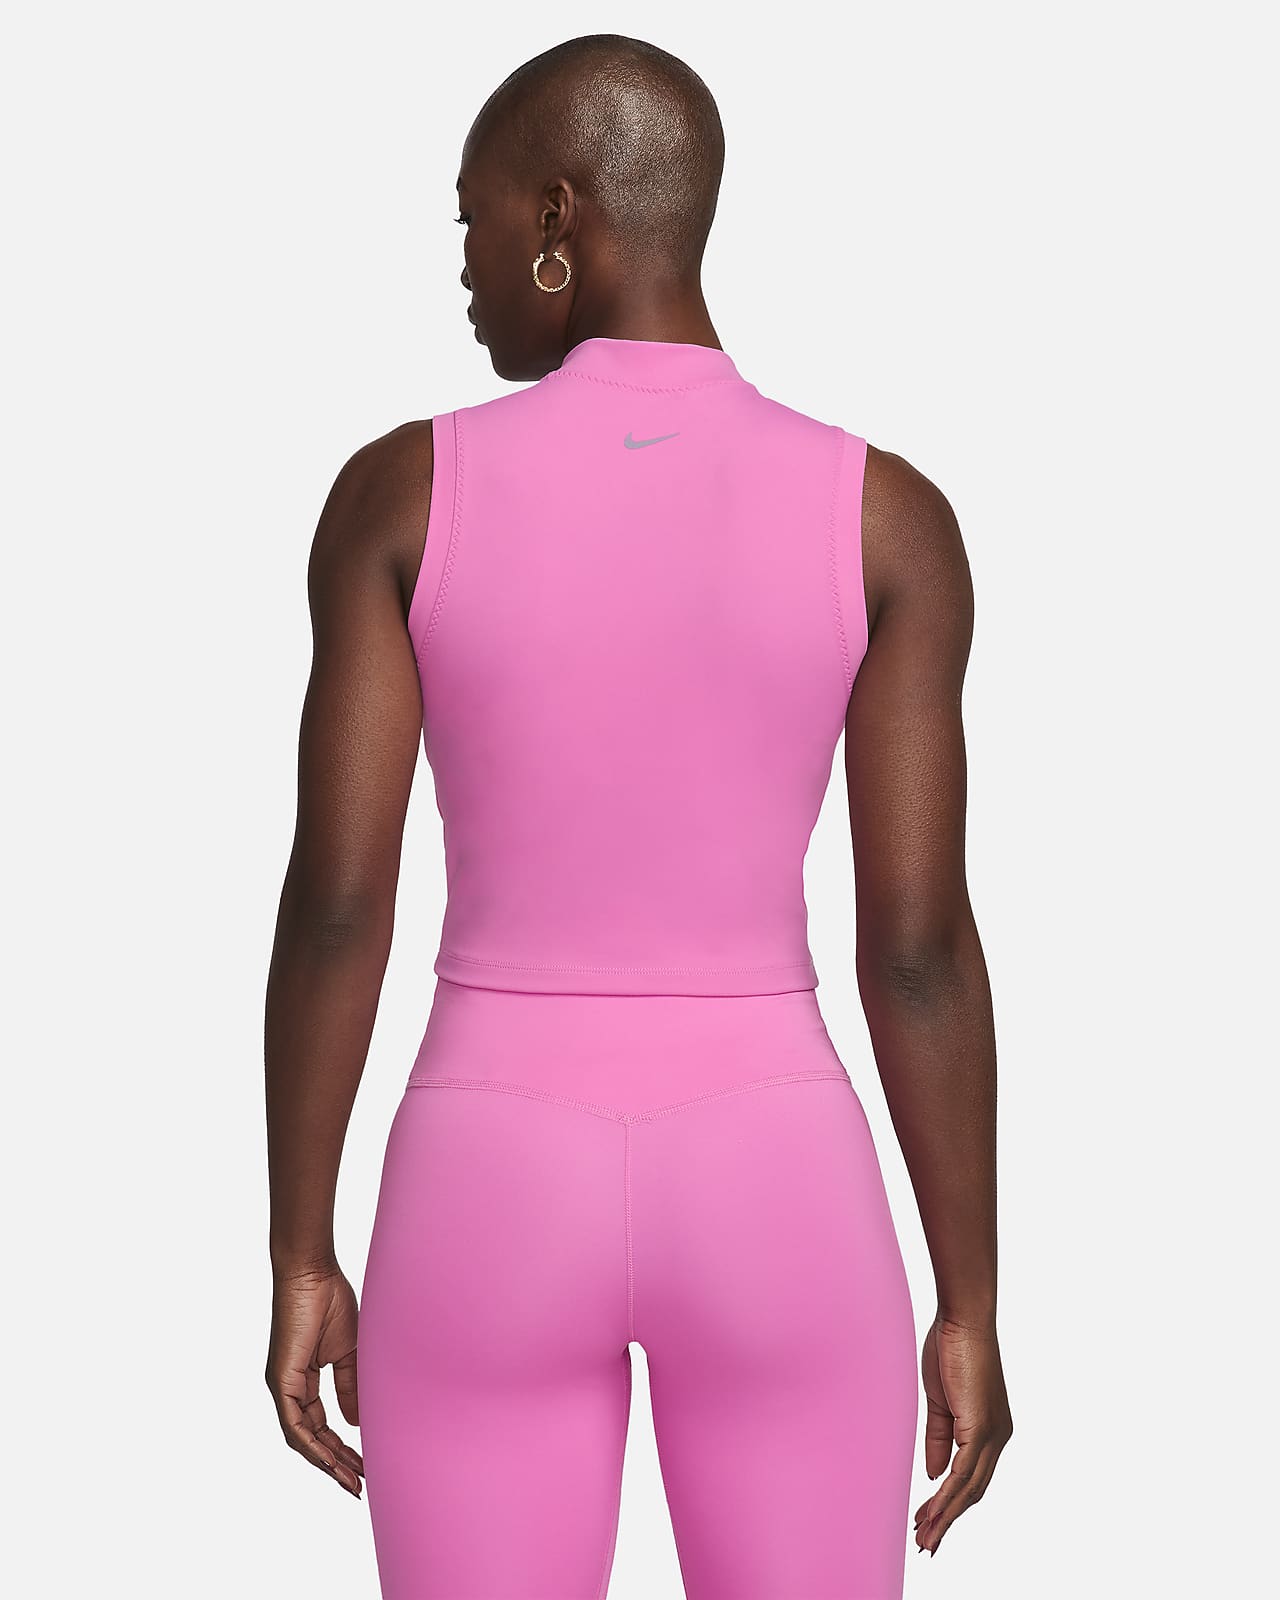 Nike dri-fit size M black pink stripes athletic crop capri pants